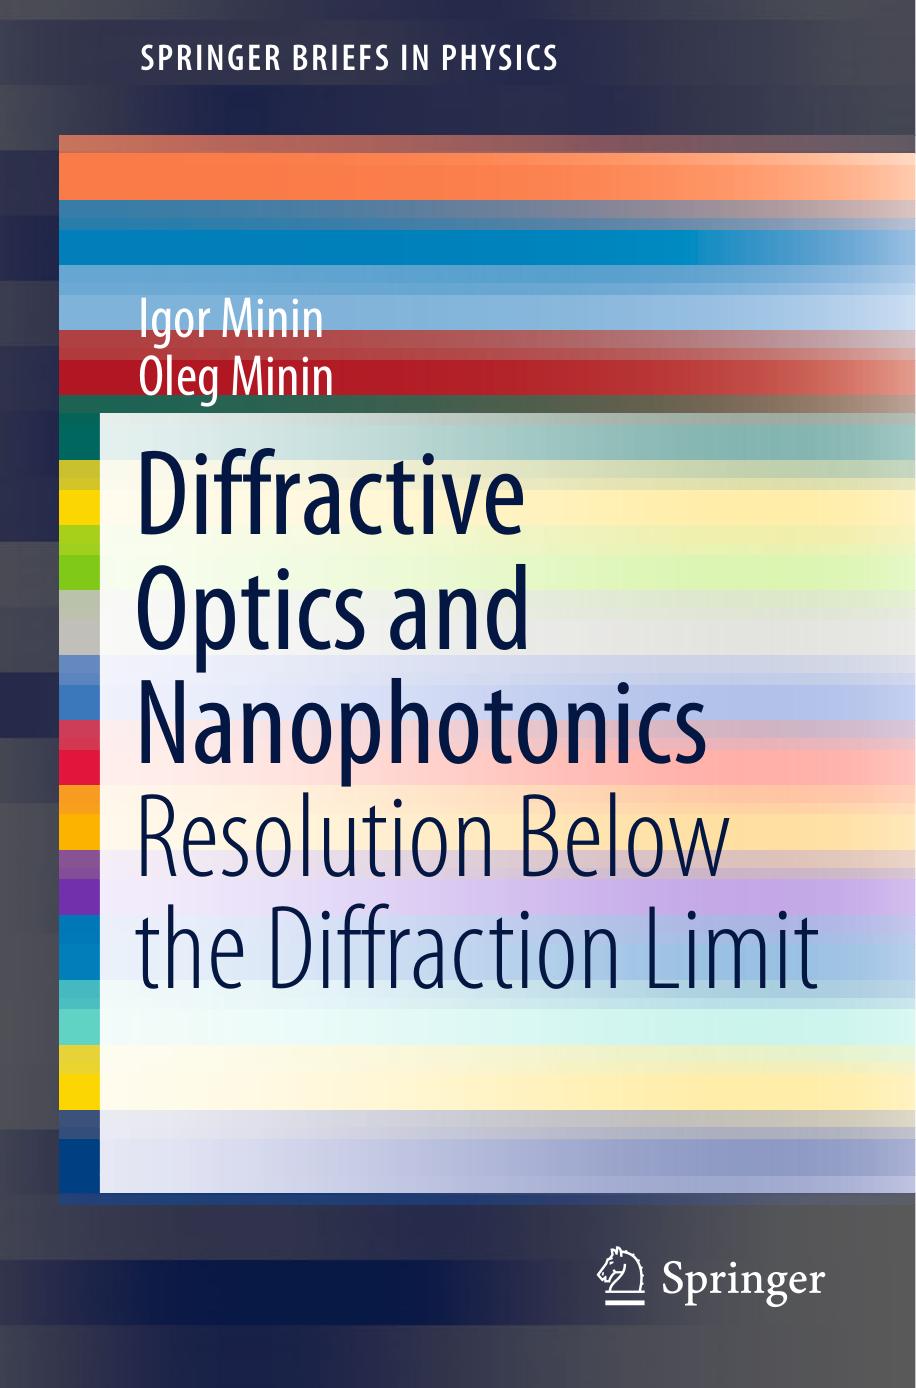 (Diffractive Optics and Nanophotonics, (2016)